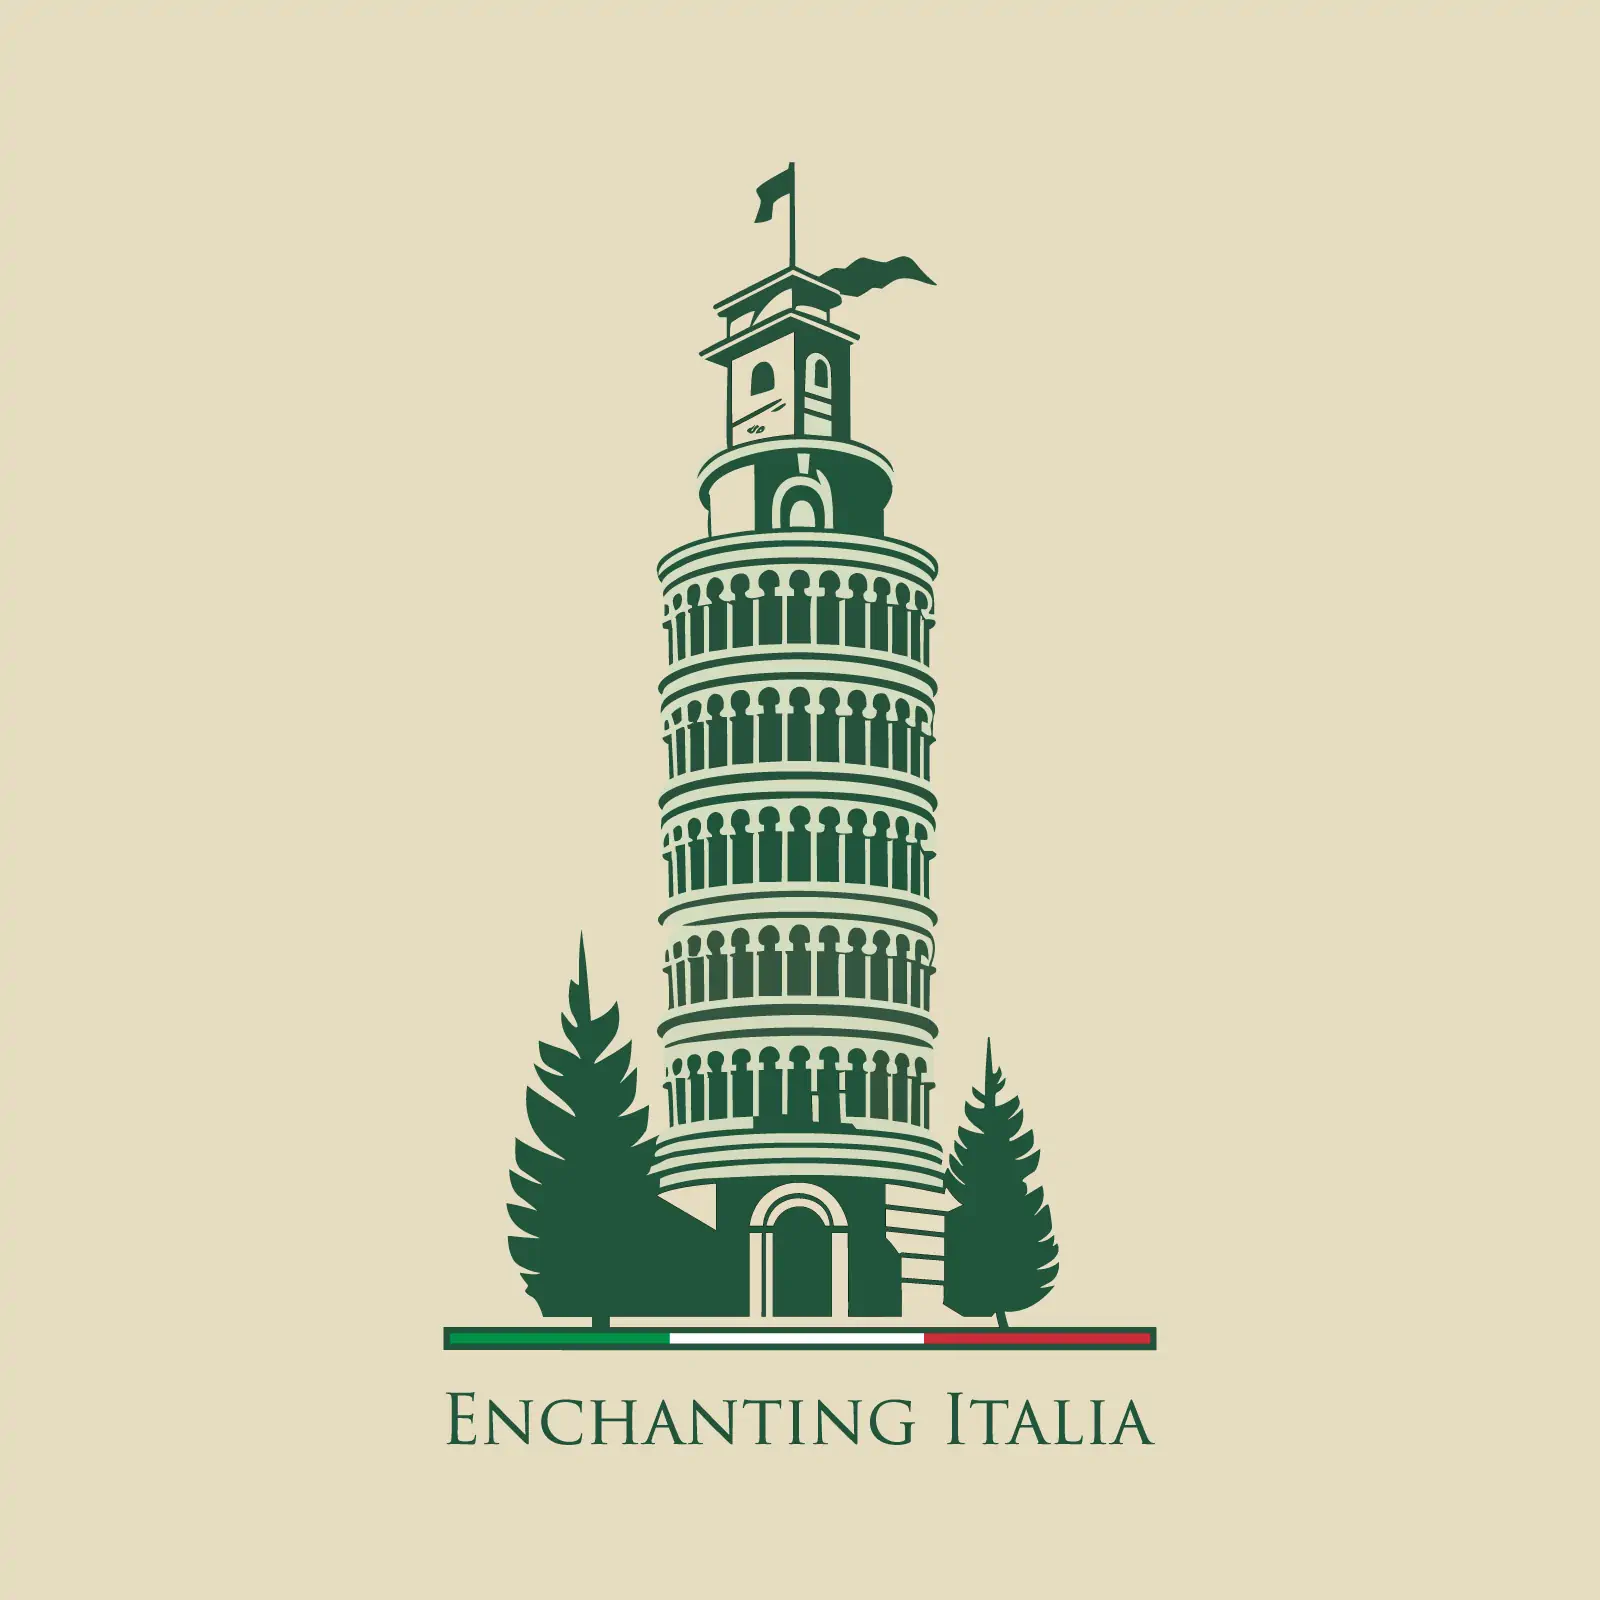 Enchanting Italia logo with Pisa tower